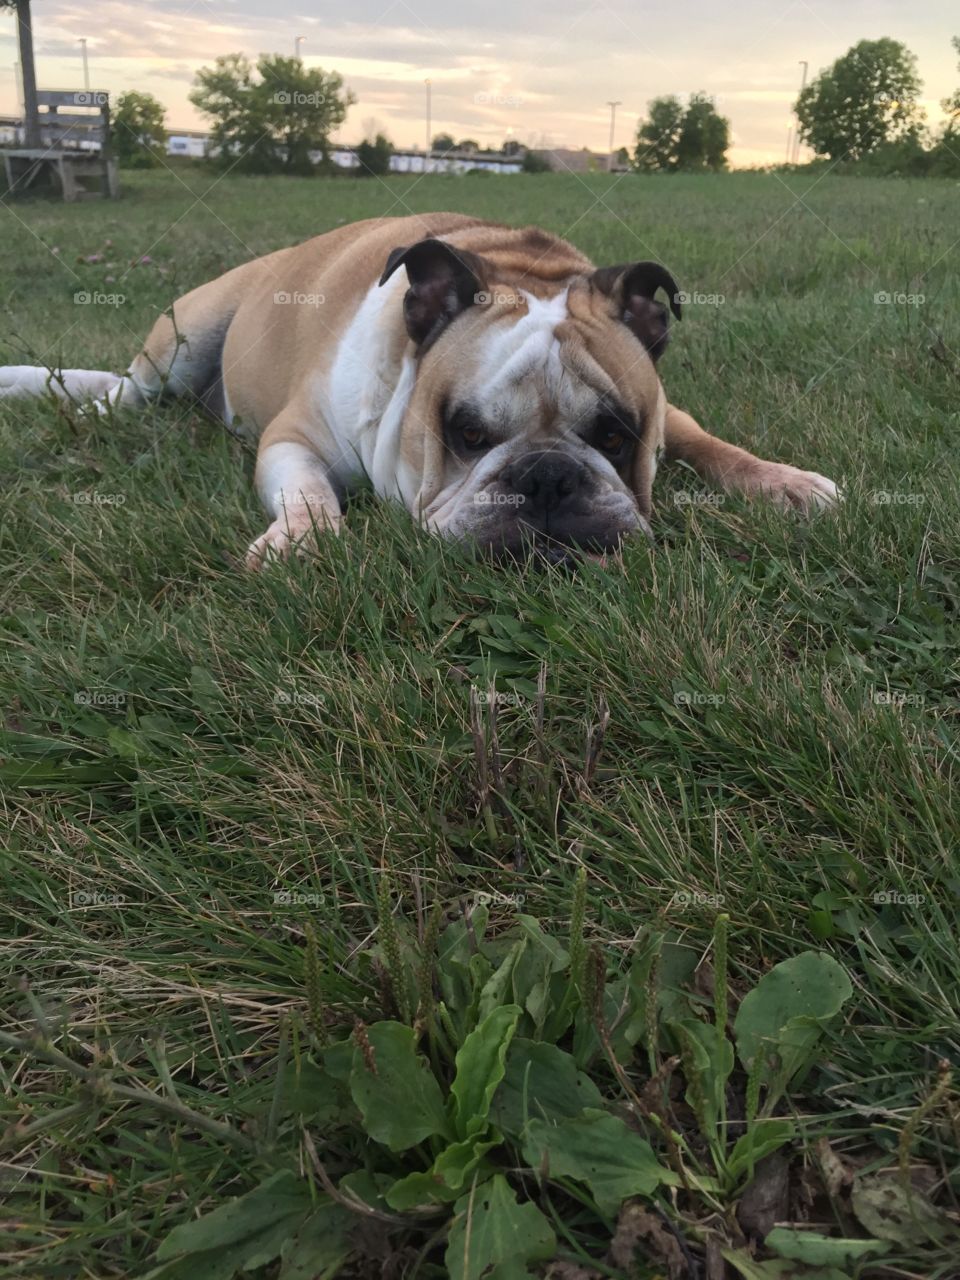 Cute bull dog in the grass